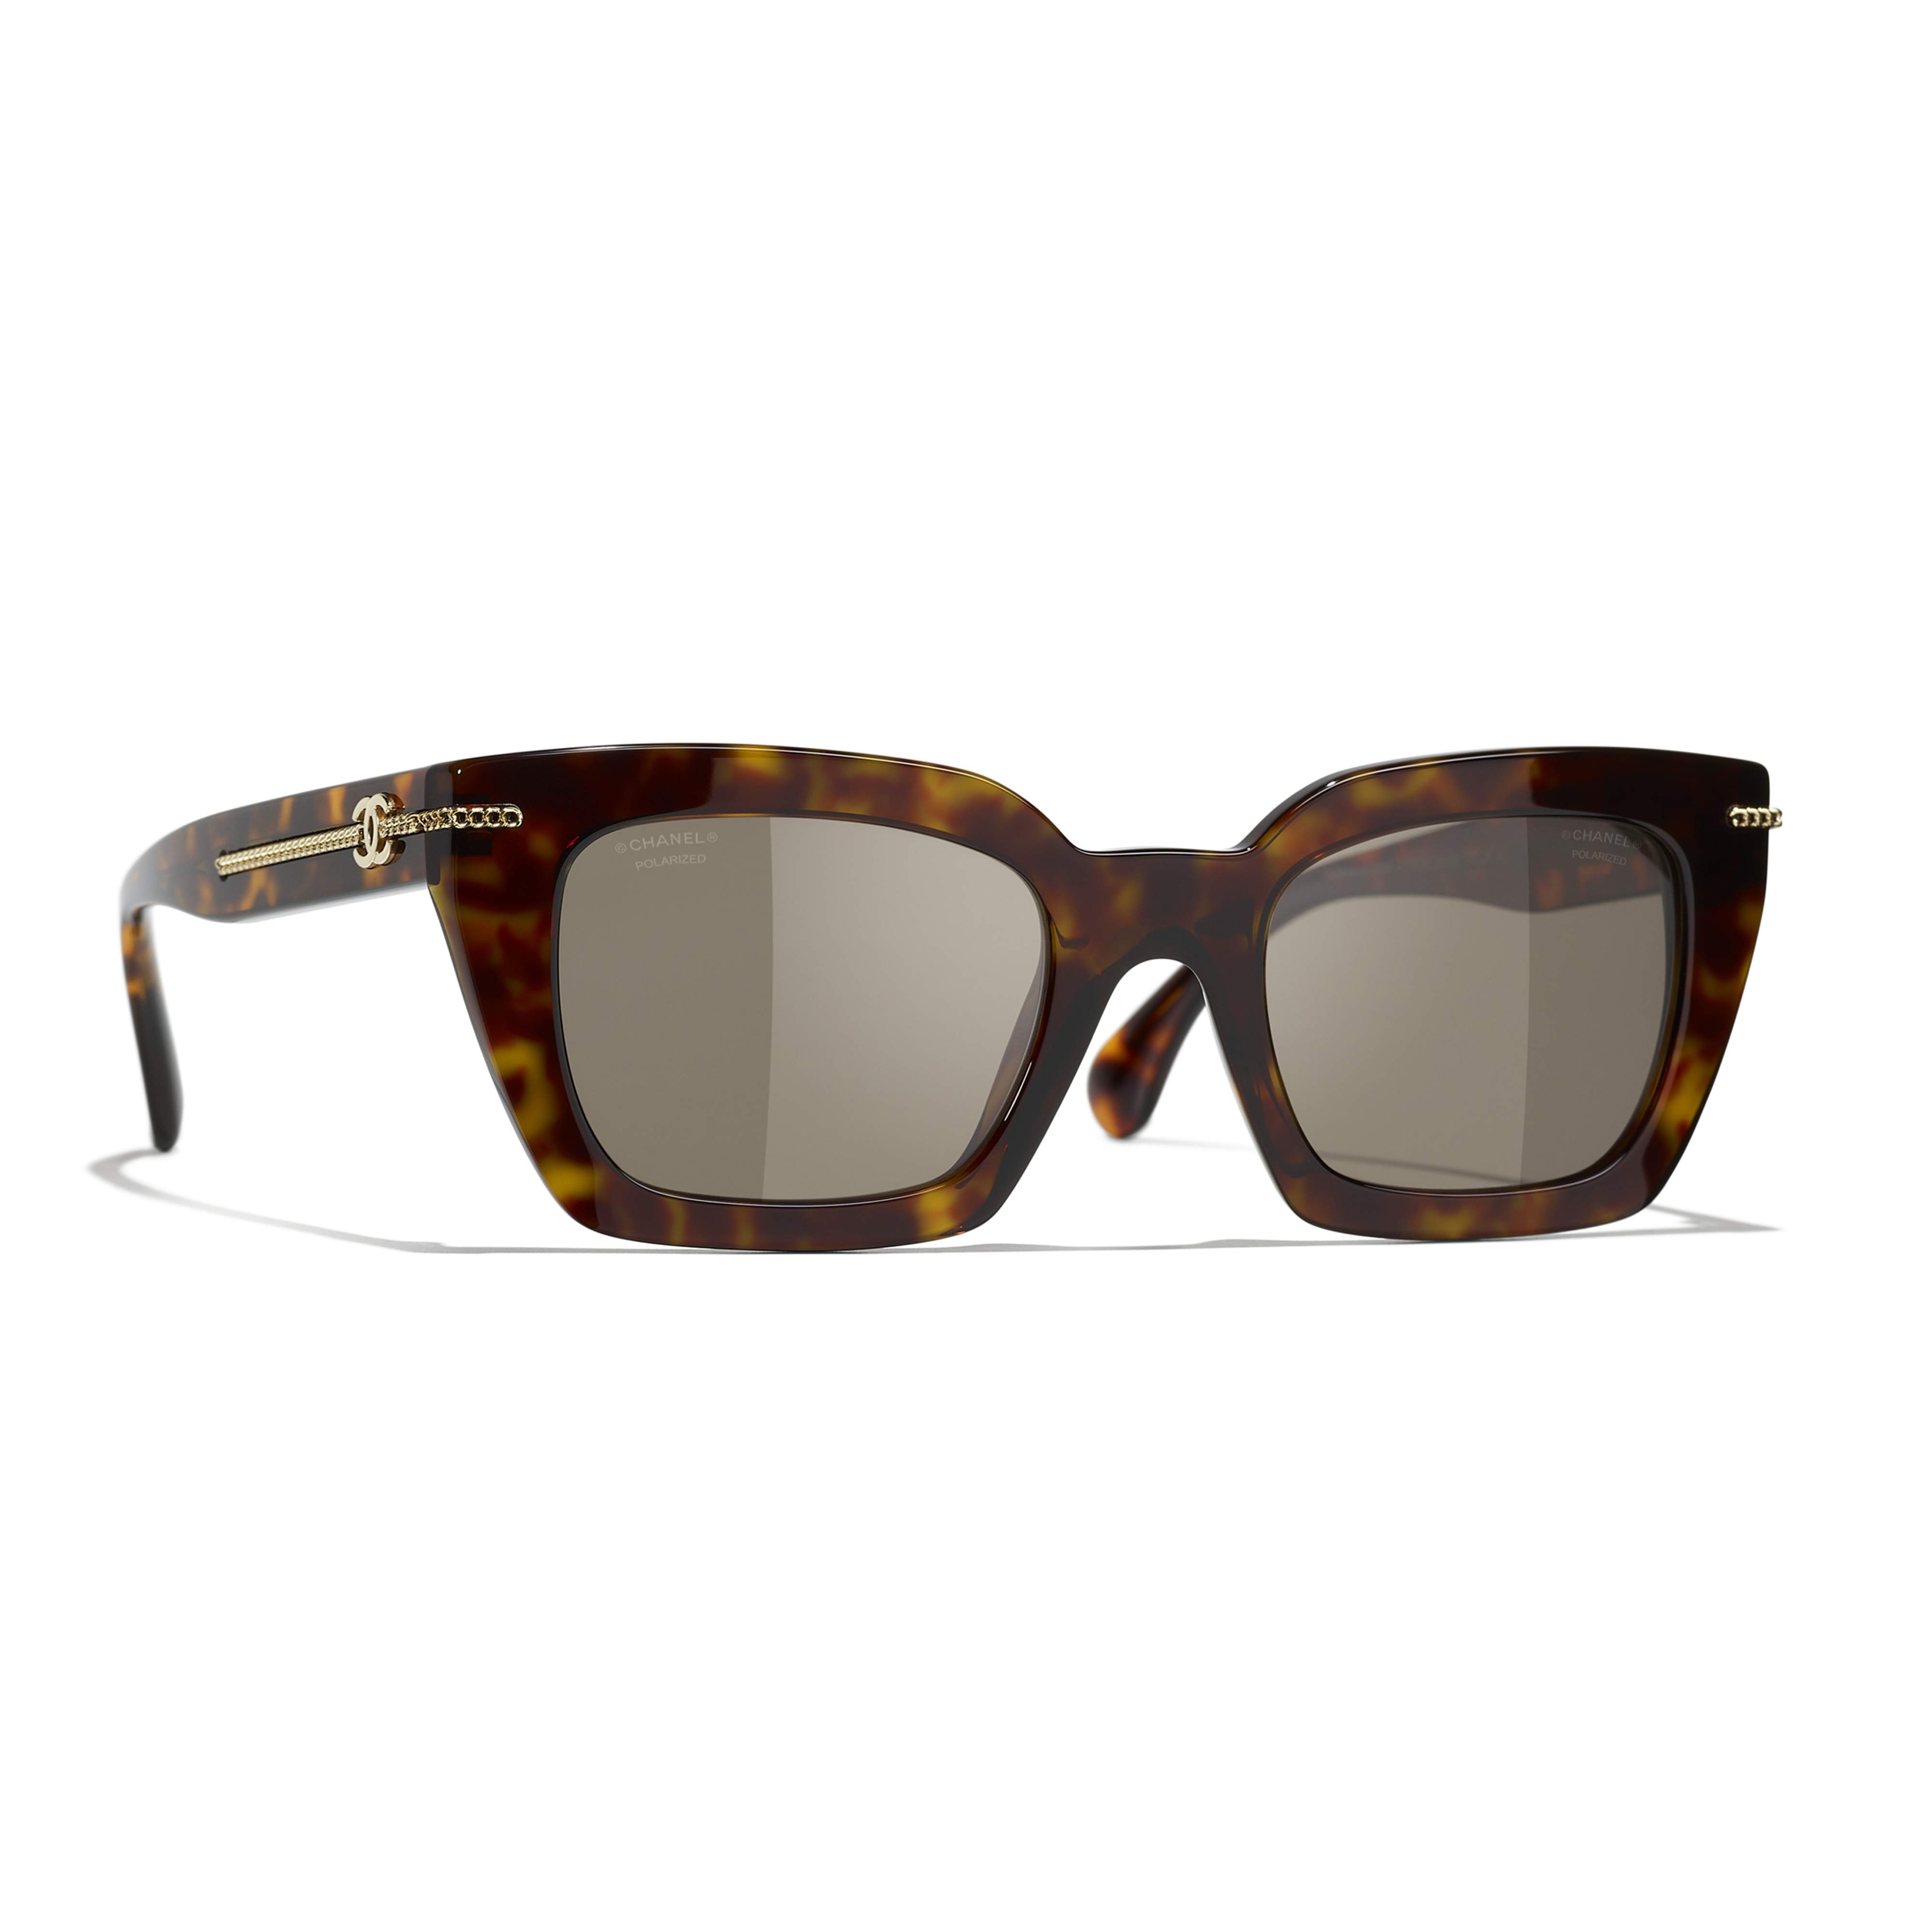 Sunglasses CHANEL CH5509 C714/83 51-22 Dark havana in stock, Price 250,00  €